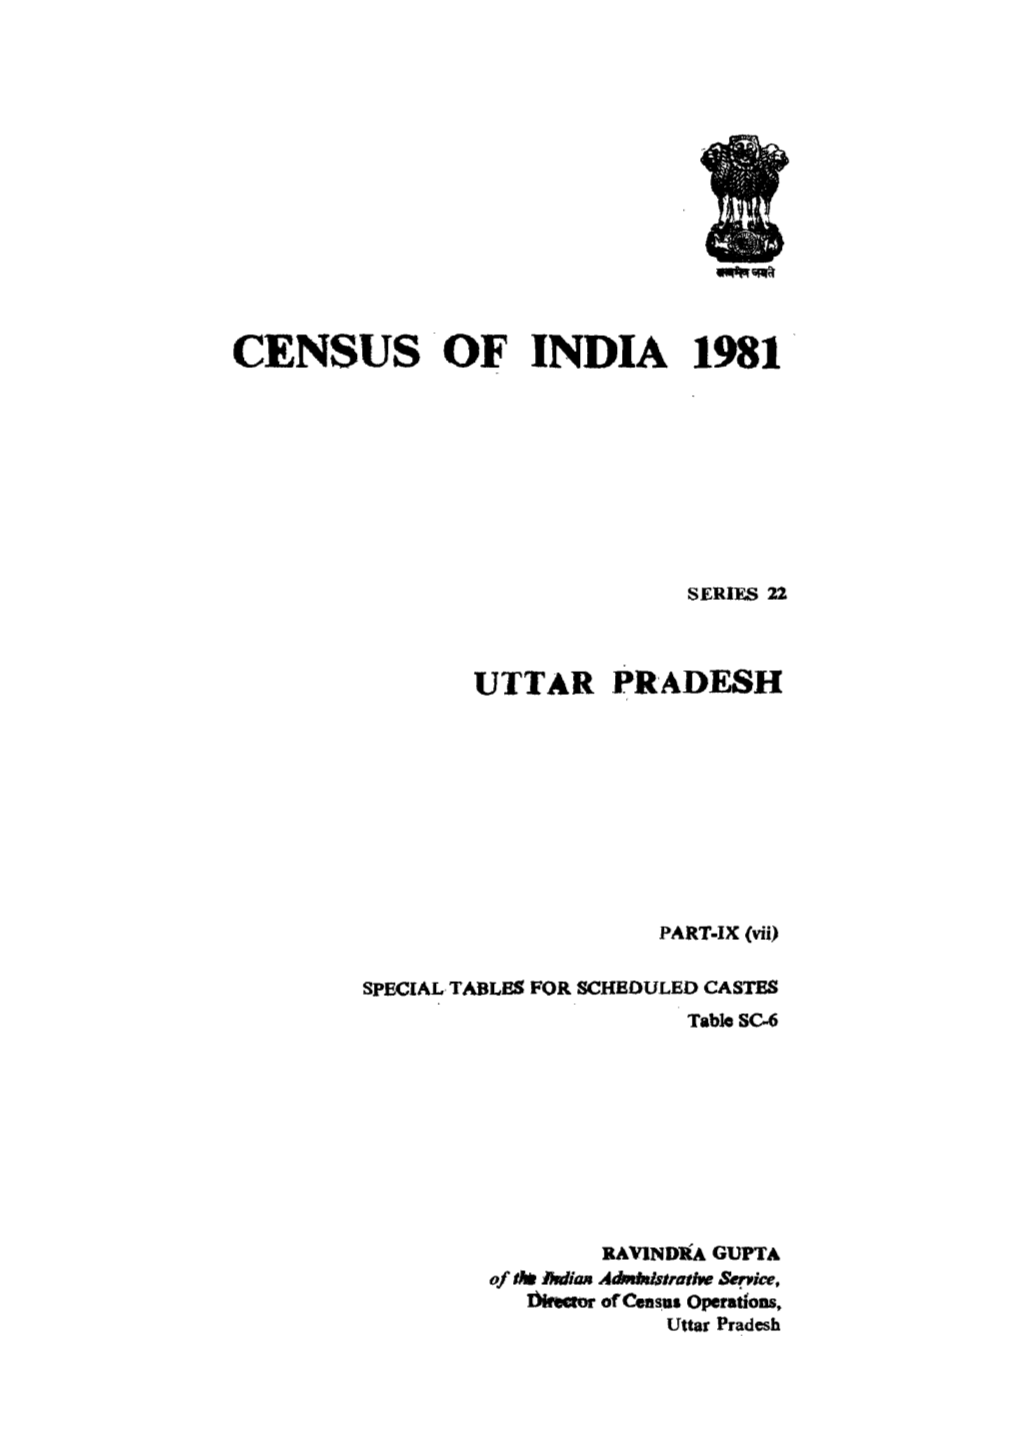 Special Tables for Schedueld Castes, Part-IX (Vii), Series-22, Uttar Pradesh